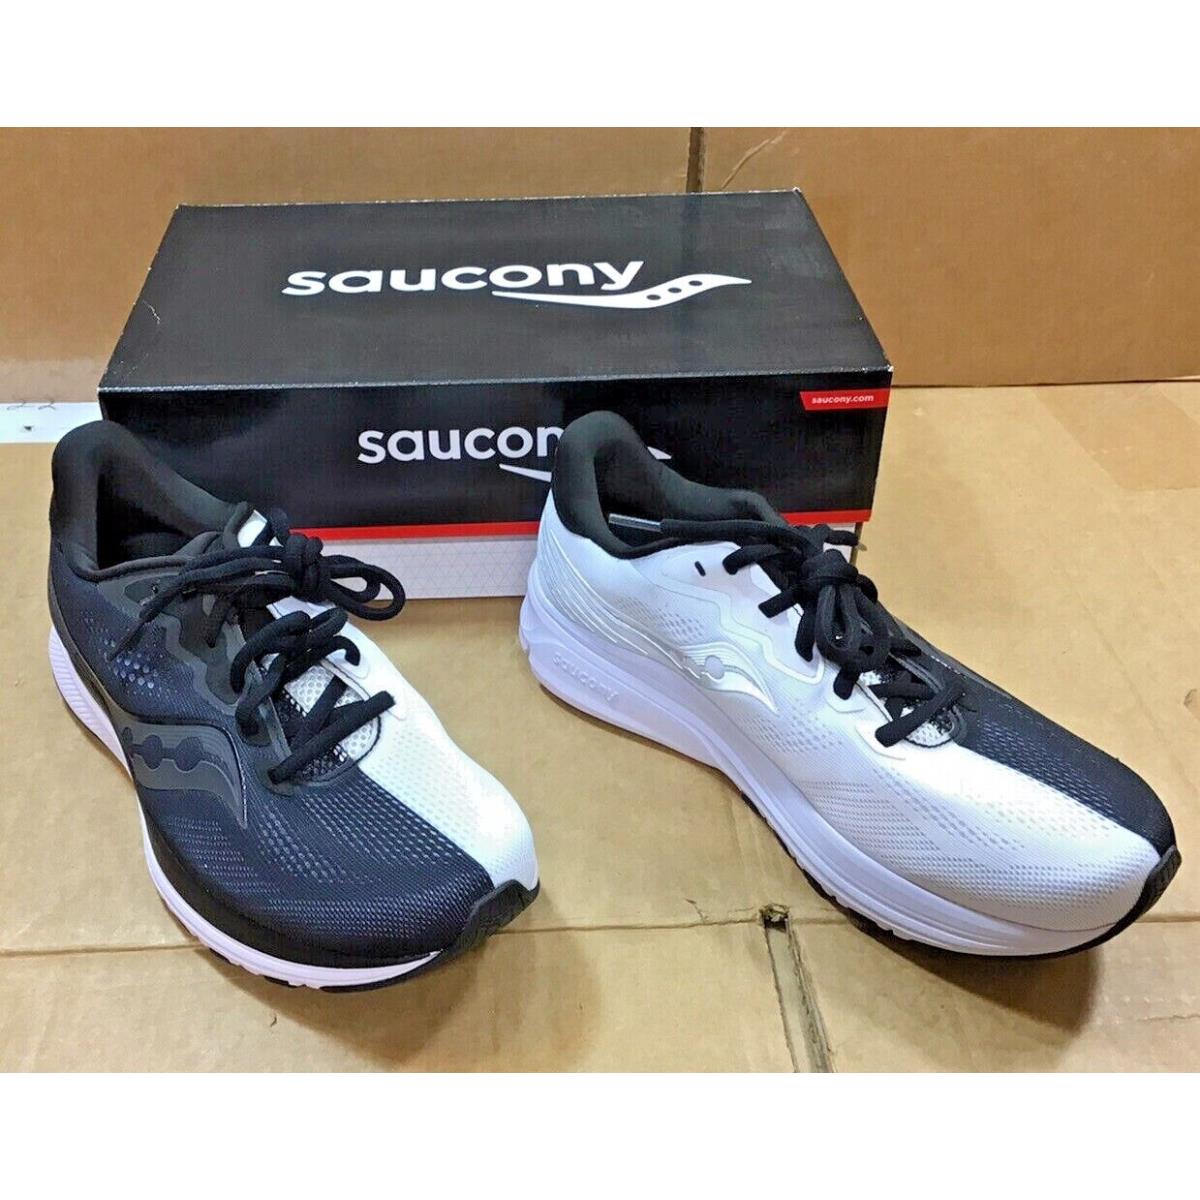 Saucony shoes  - Black/White 1